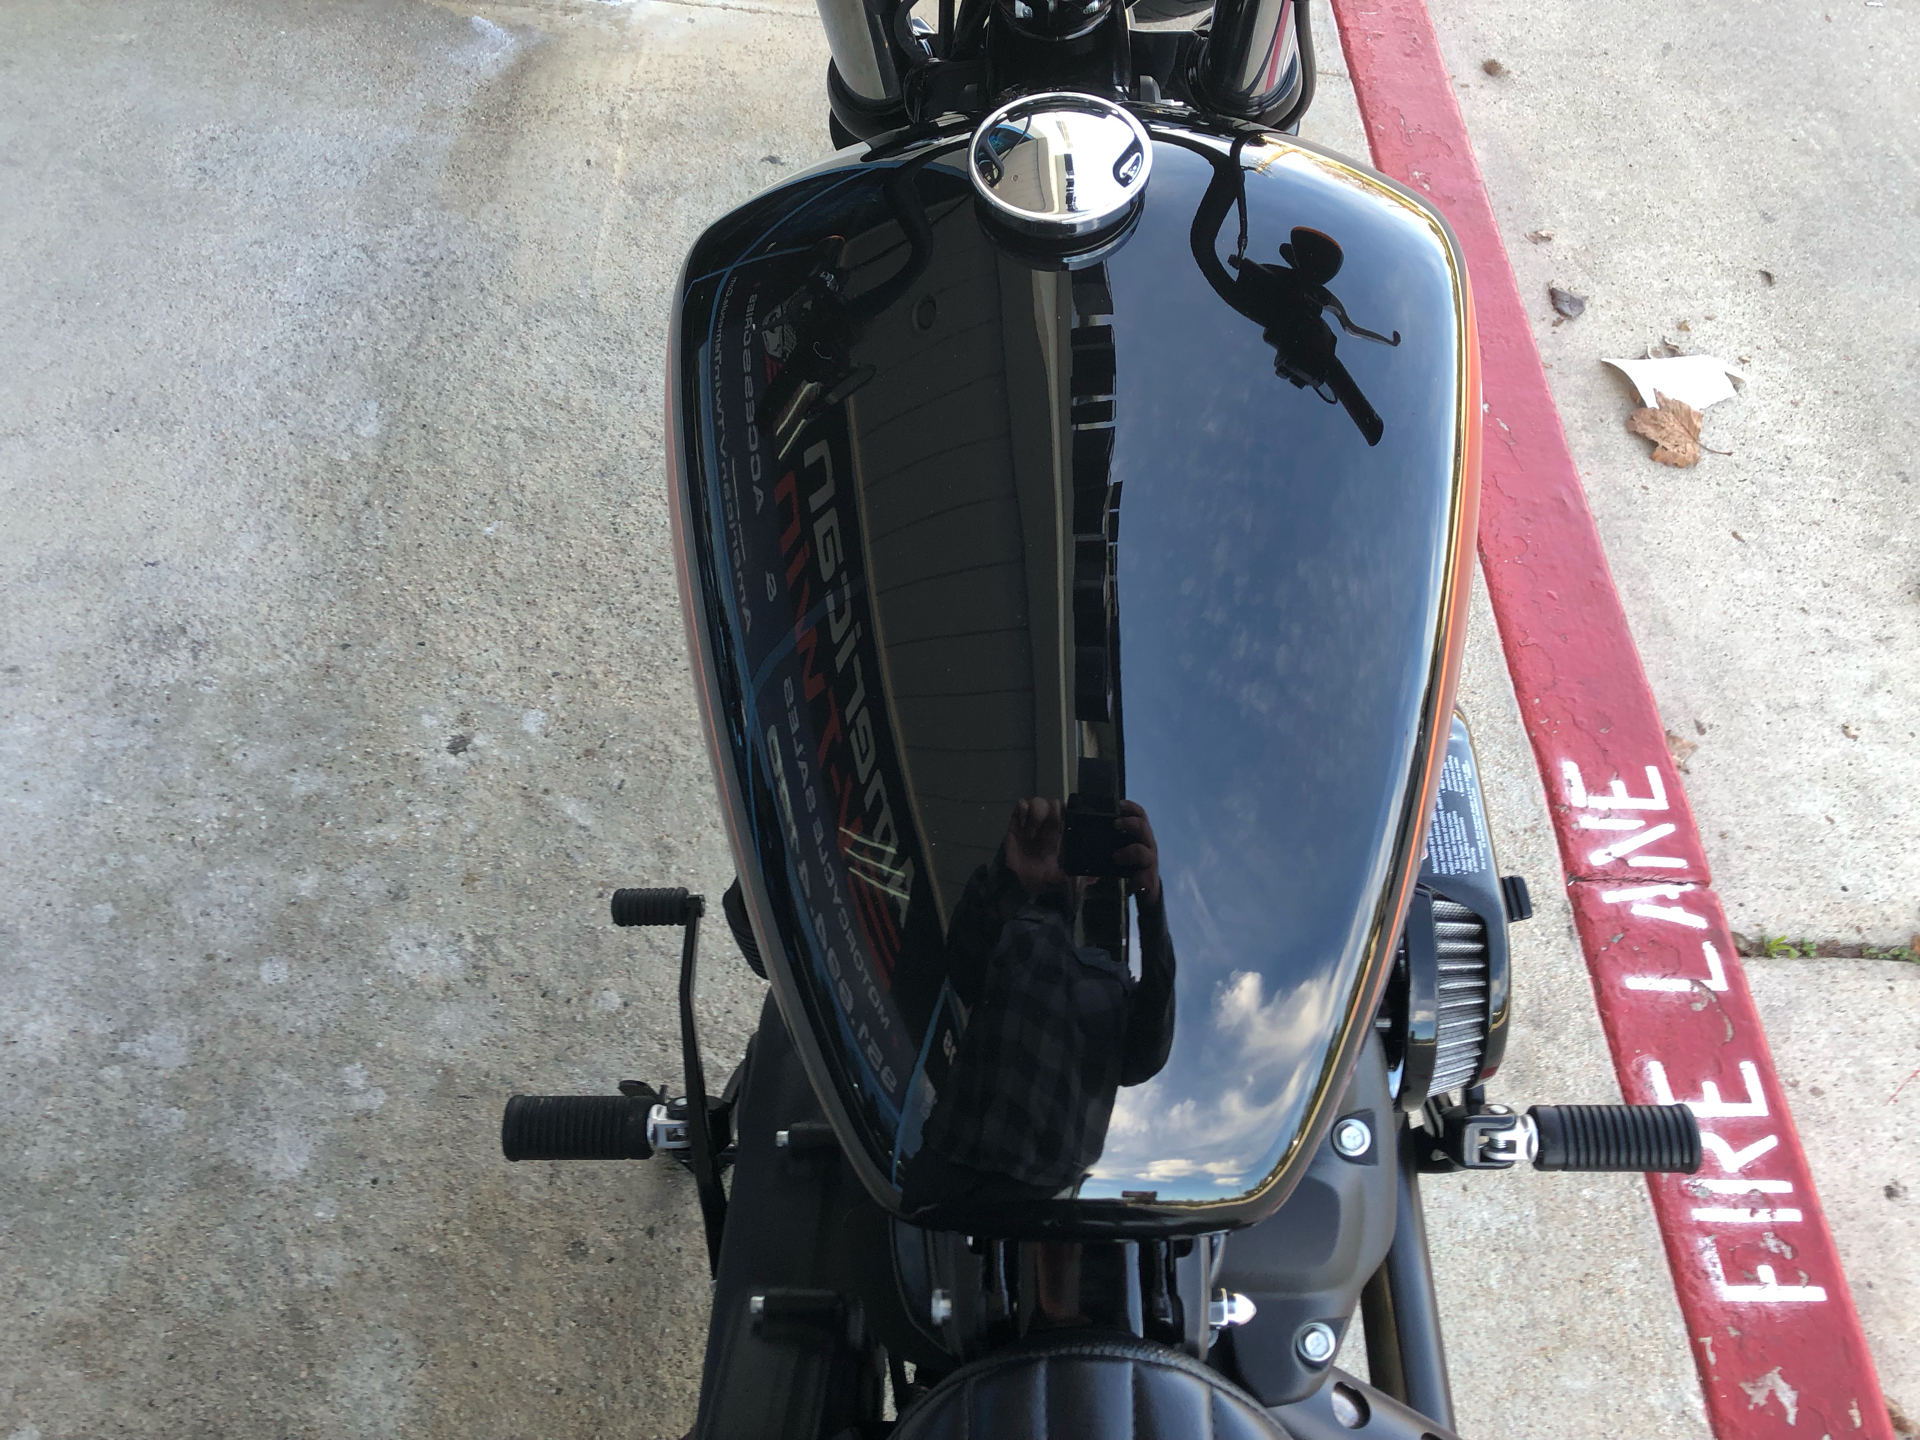 2021 Harley-Davidson Street Bob® 114 in Temecula, California - Photo 10